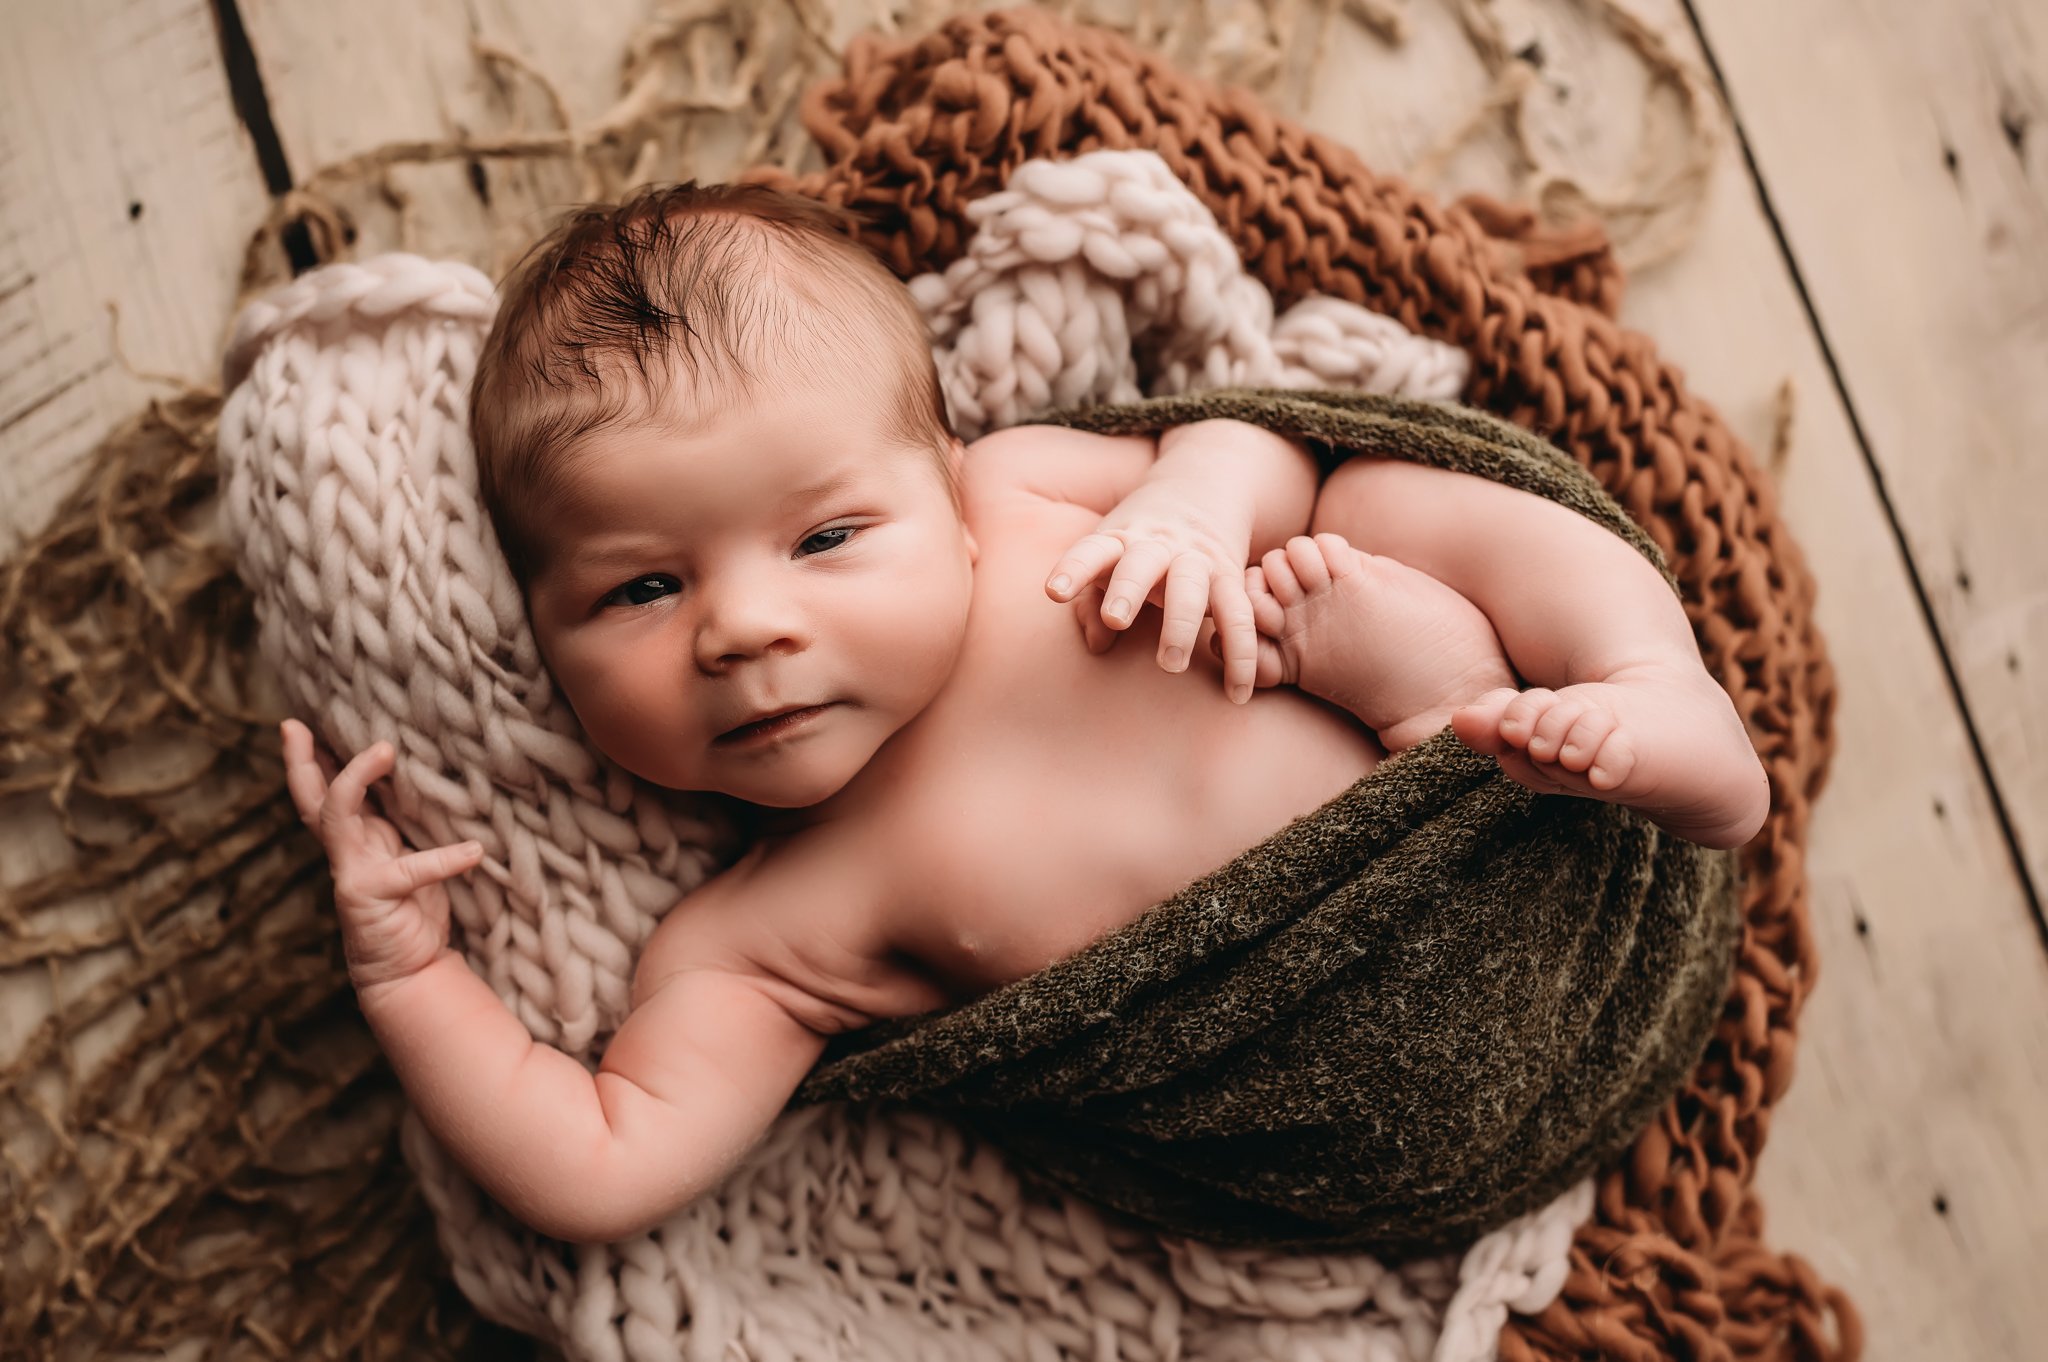 central illinois newborn photographer.jpg